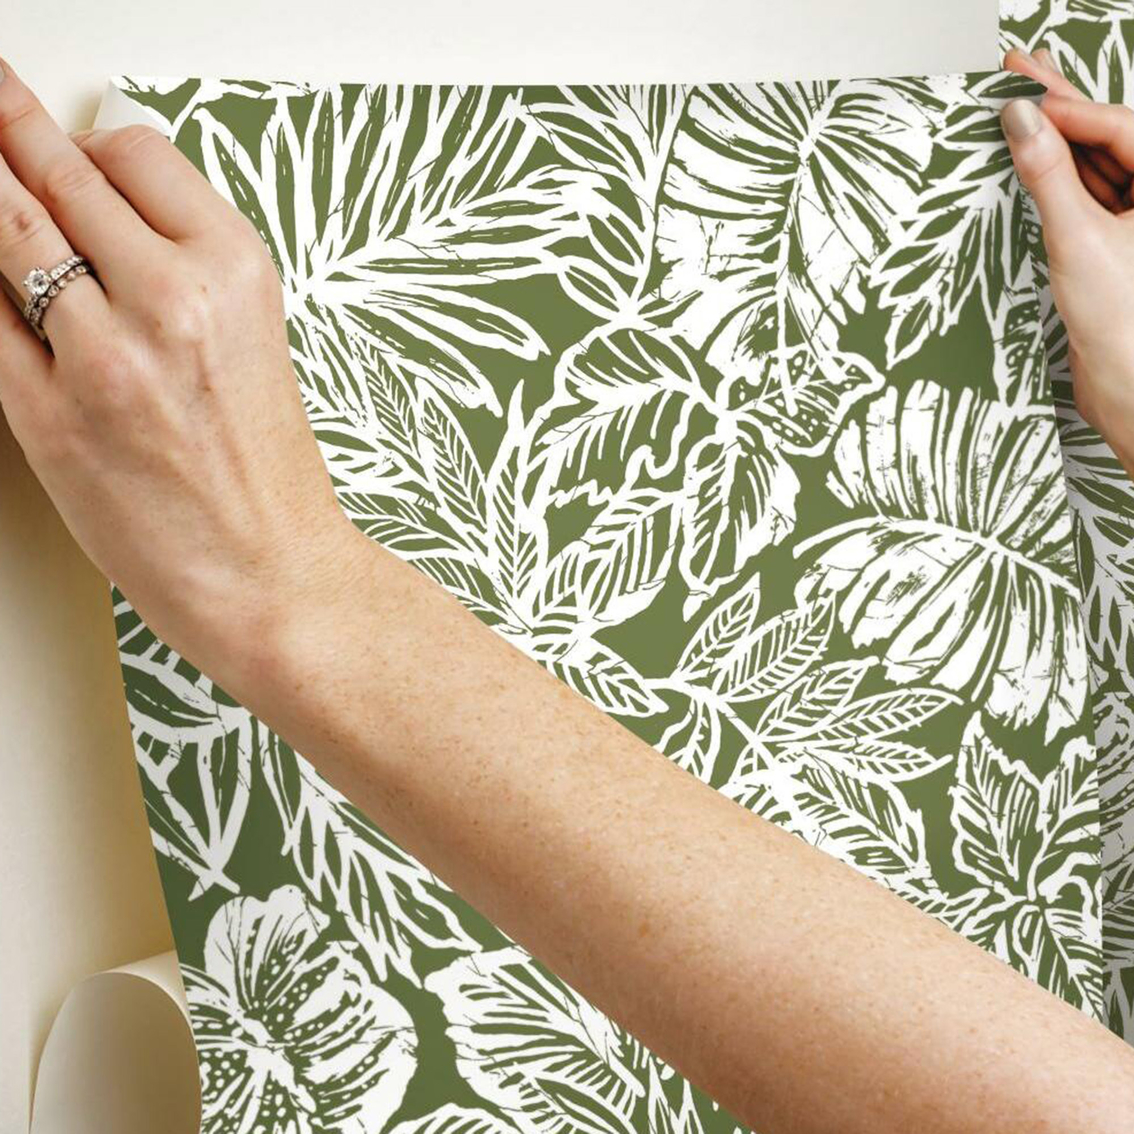 RoomMates Batik Tropical Leaf Peel and Stick Wallpaper - Image 3 of 7